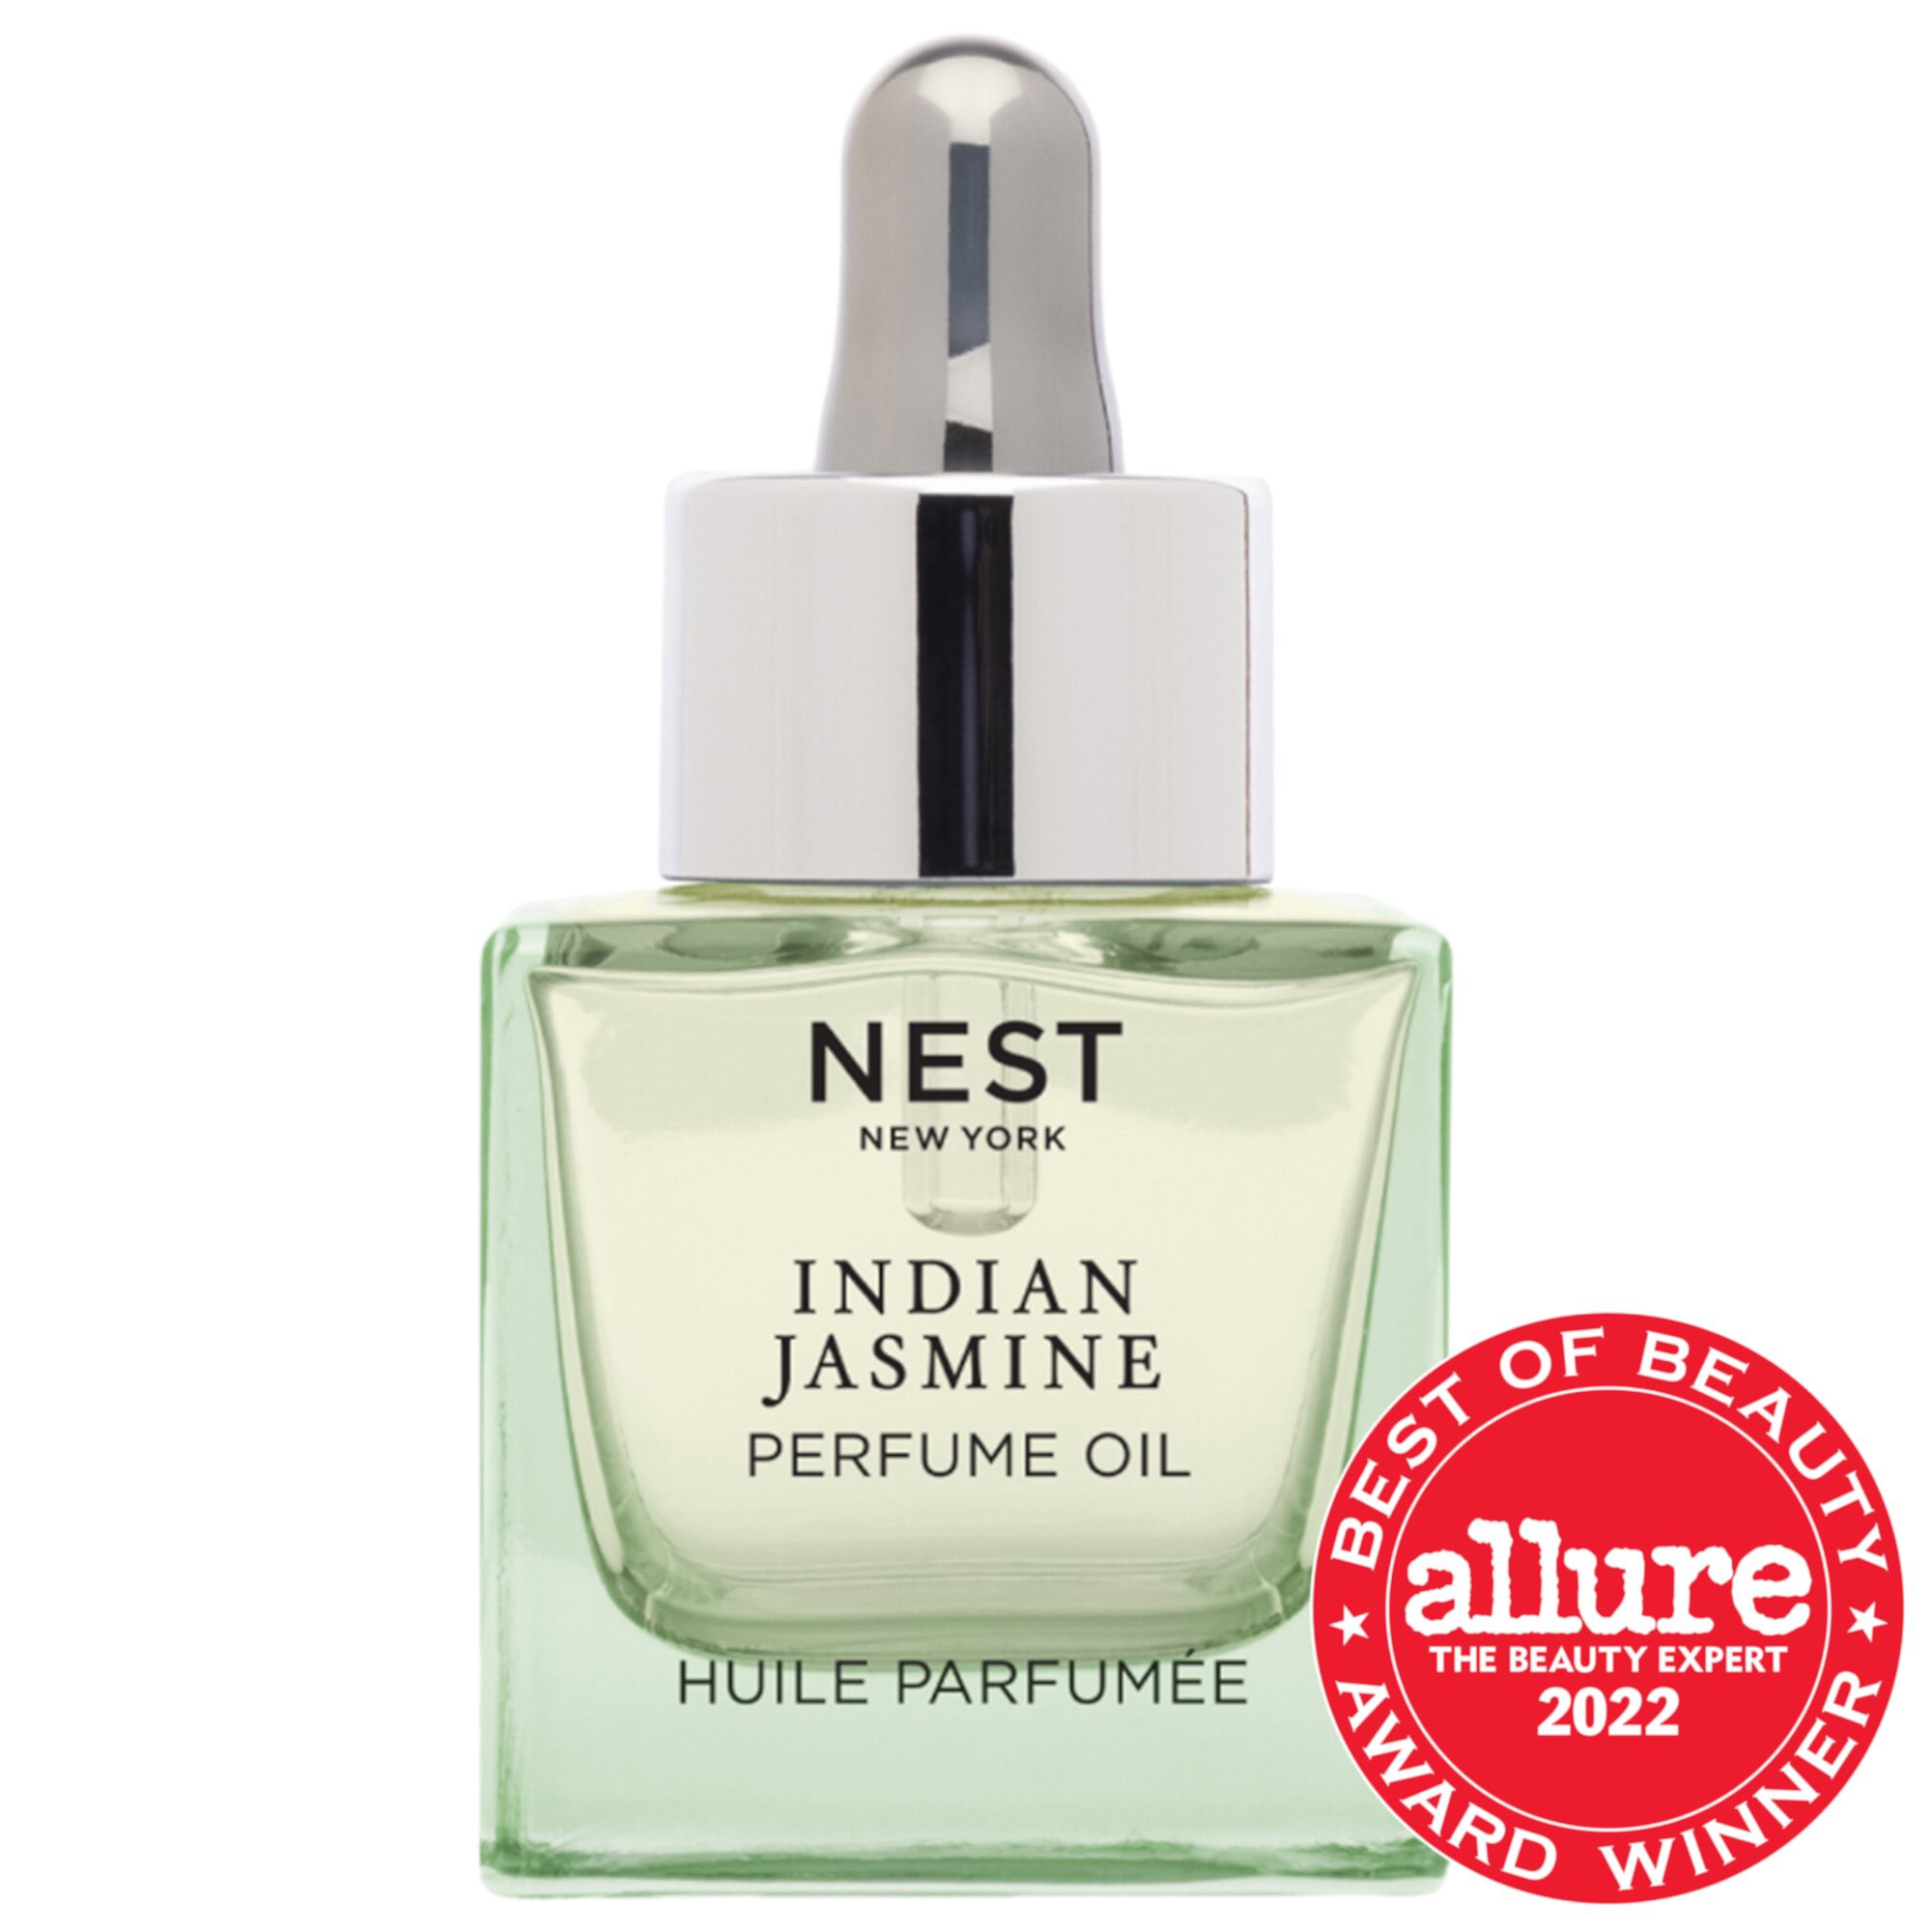 Indian Jasmine Perfume Oil Nest New York